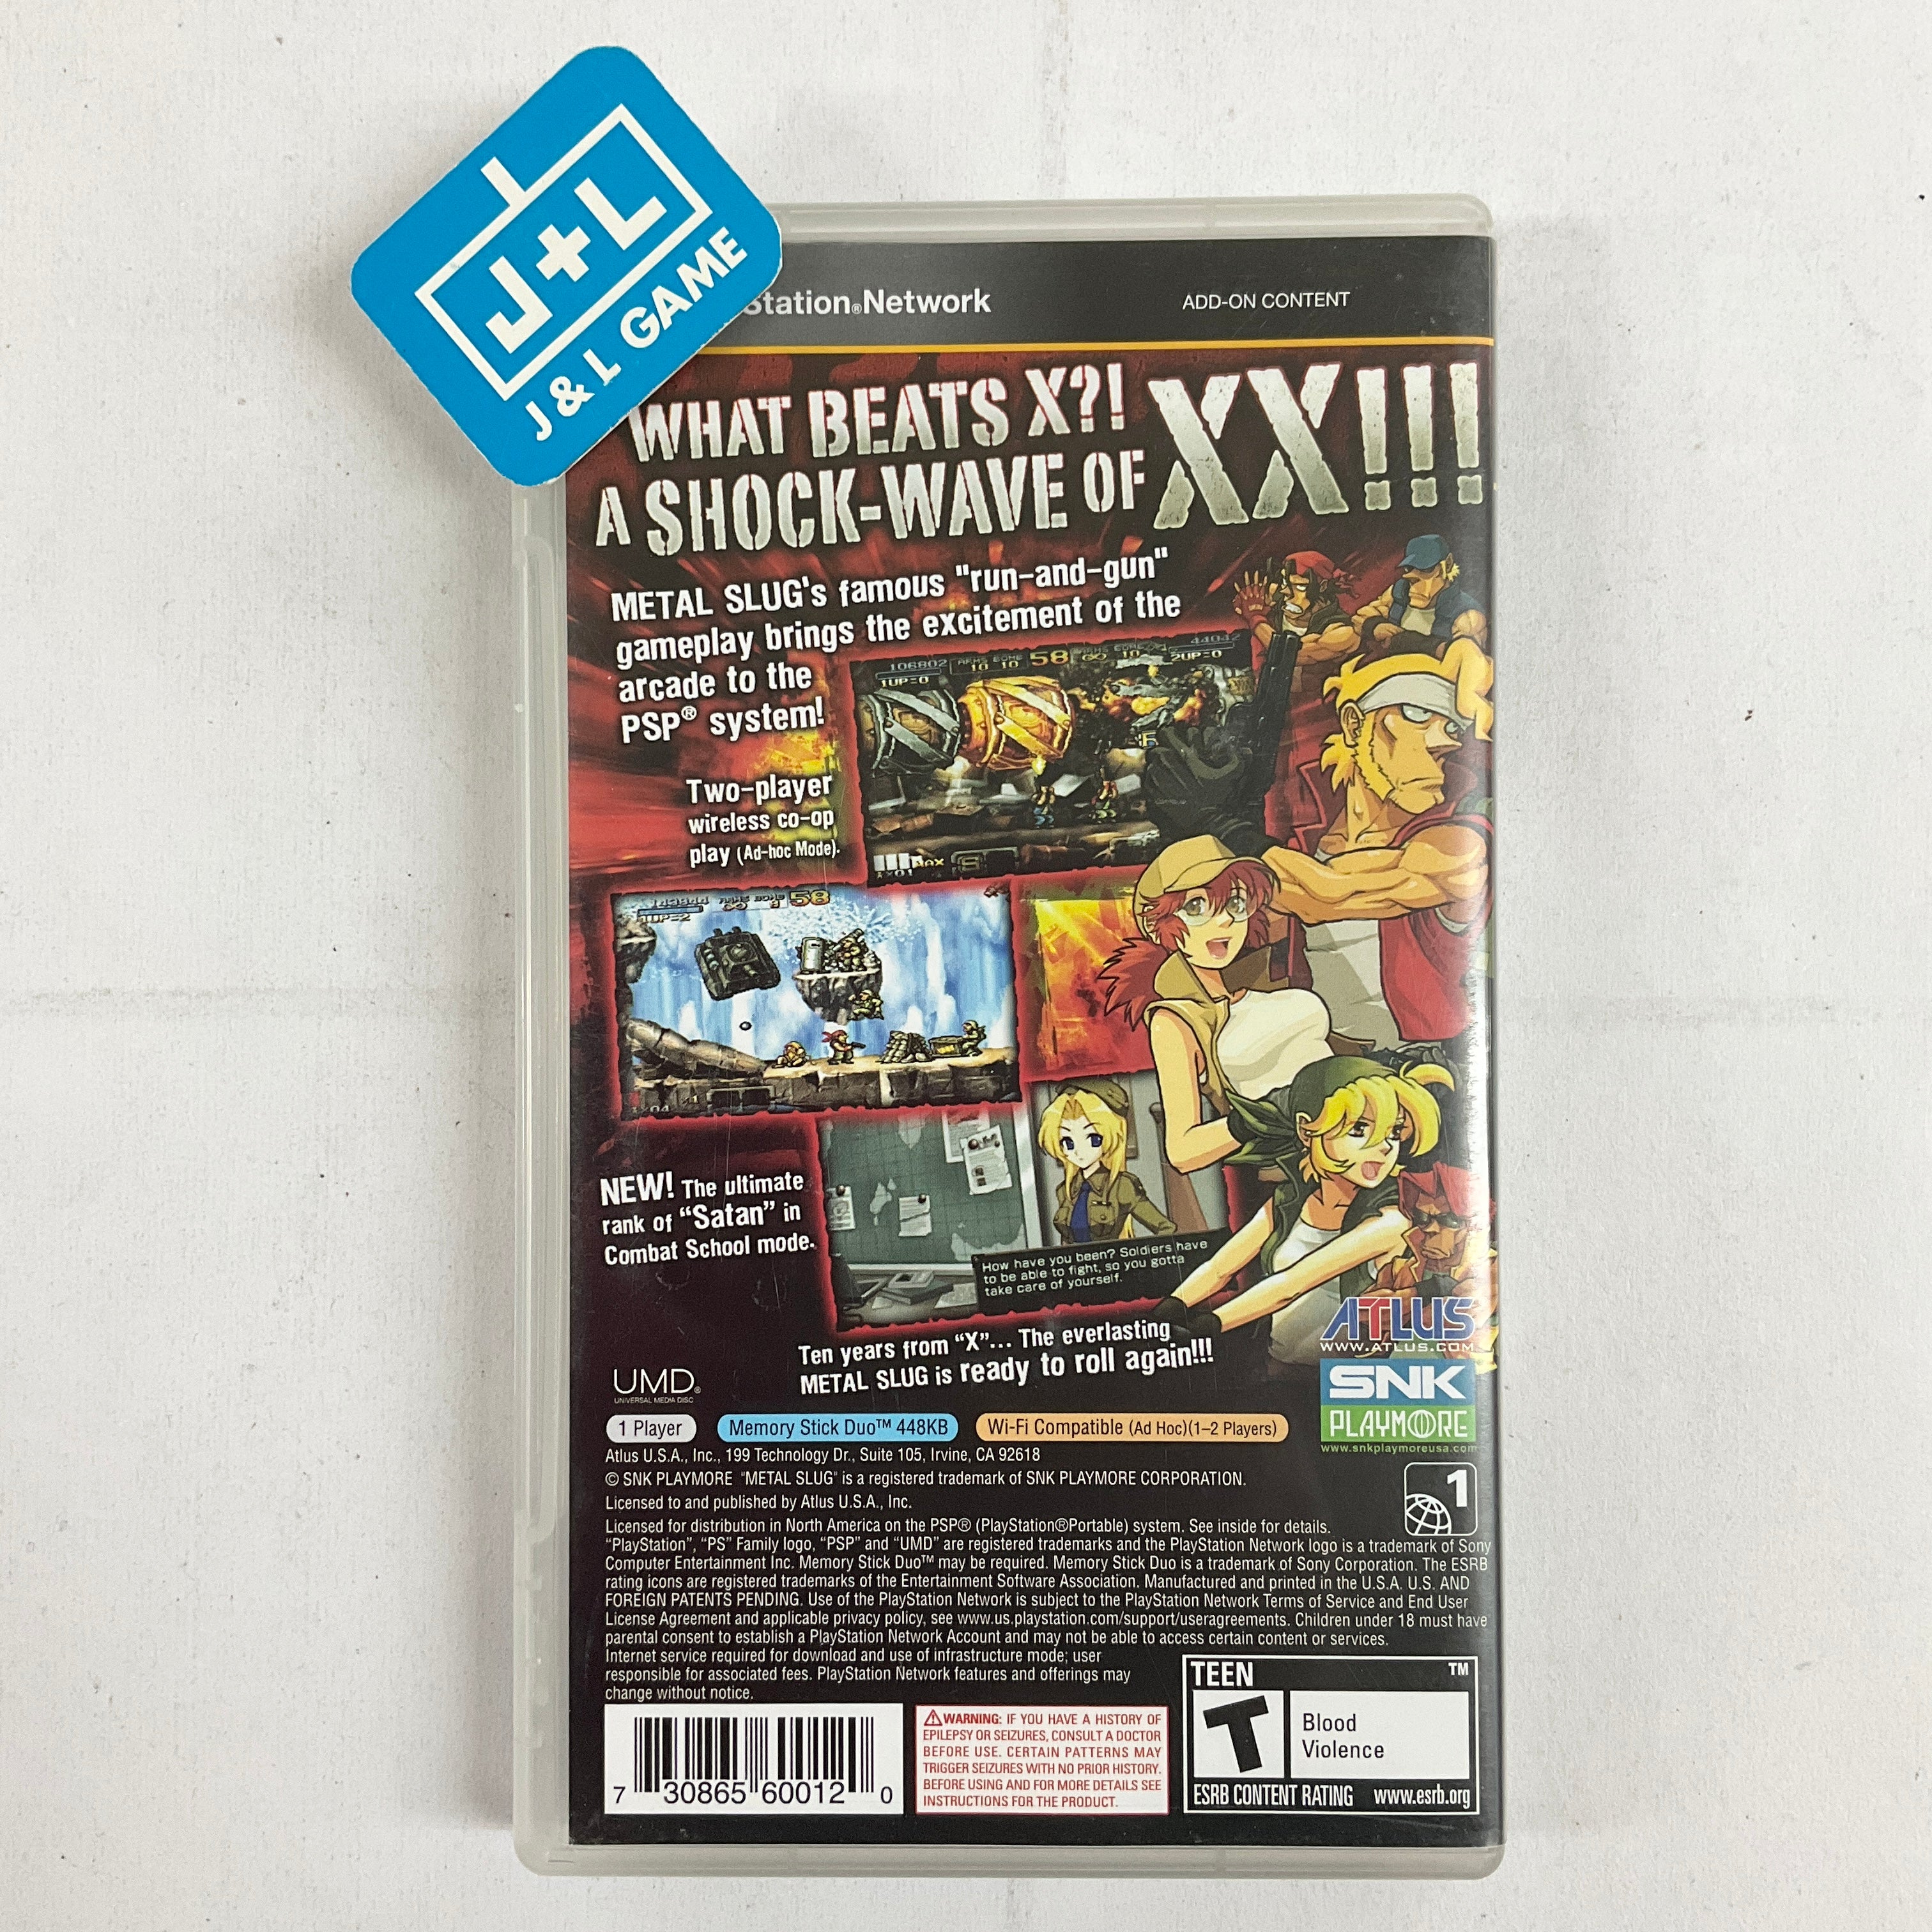 Metal Slug XX - Sony PSP [Pre-Owned] Video Games Atlus   